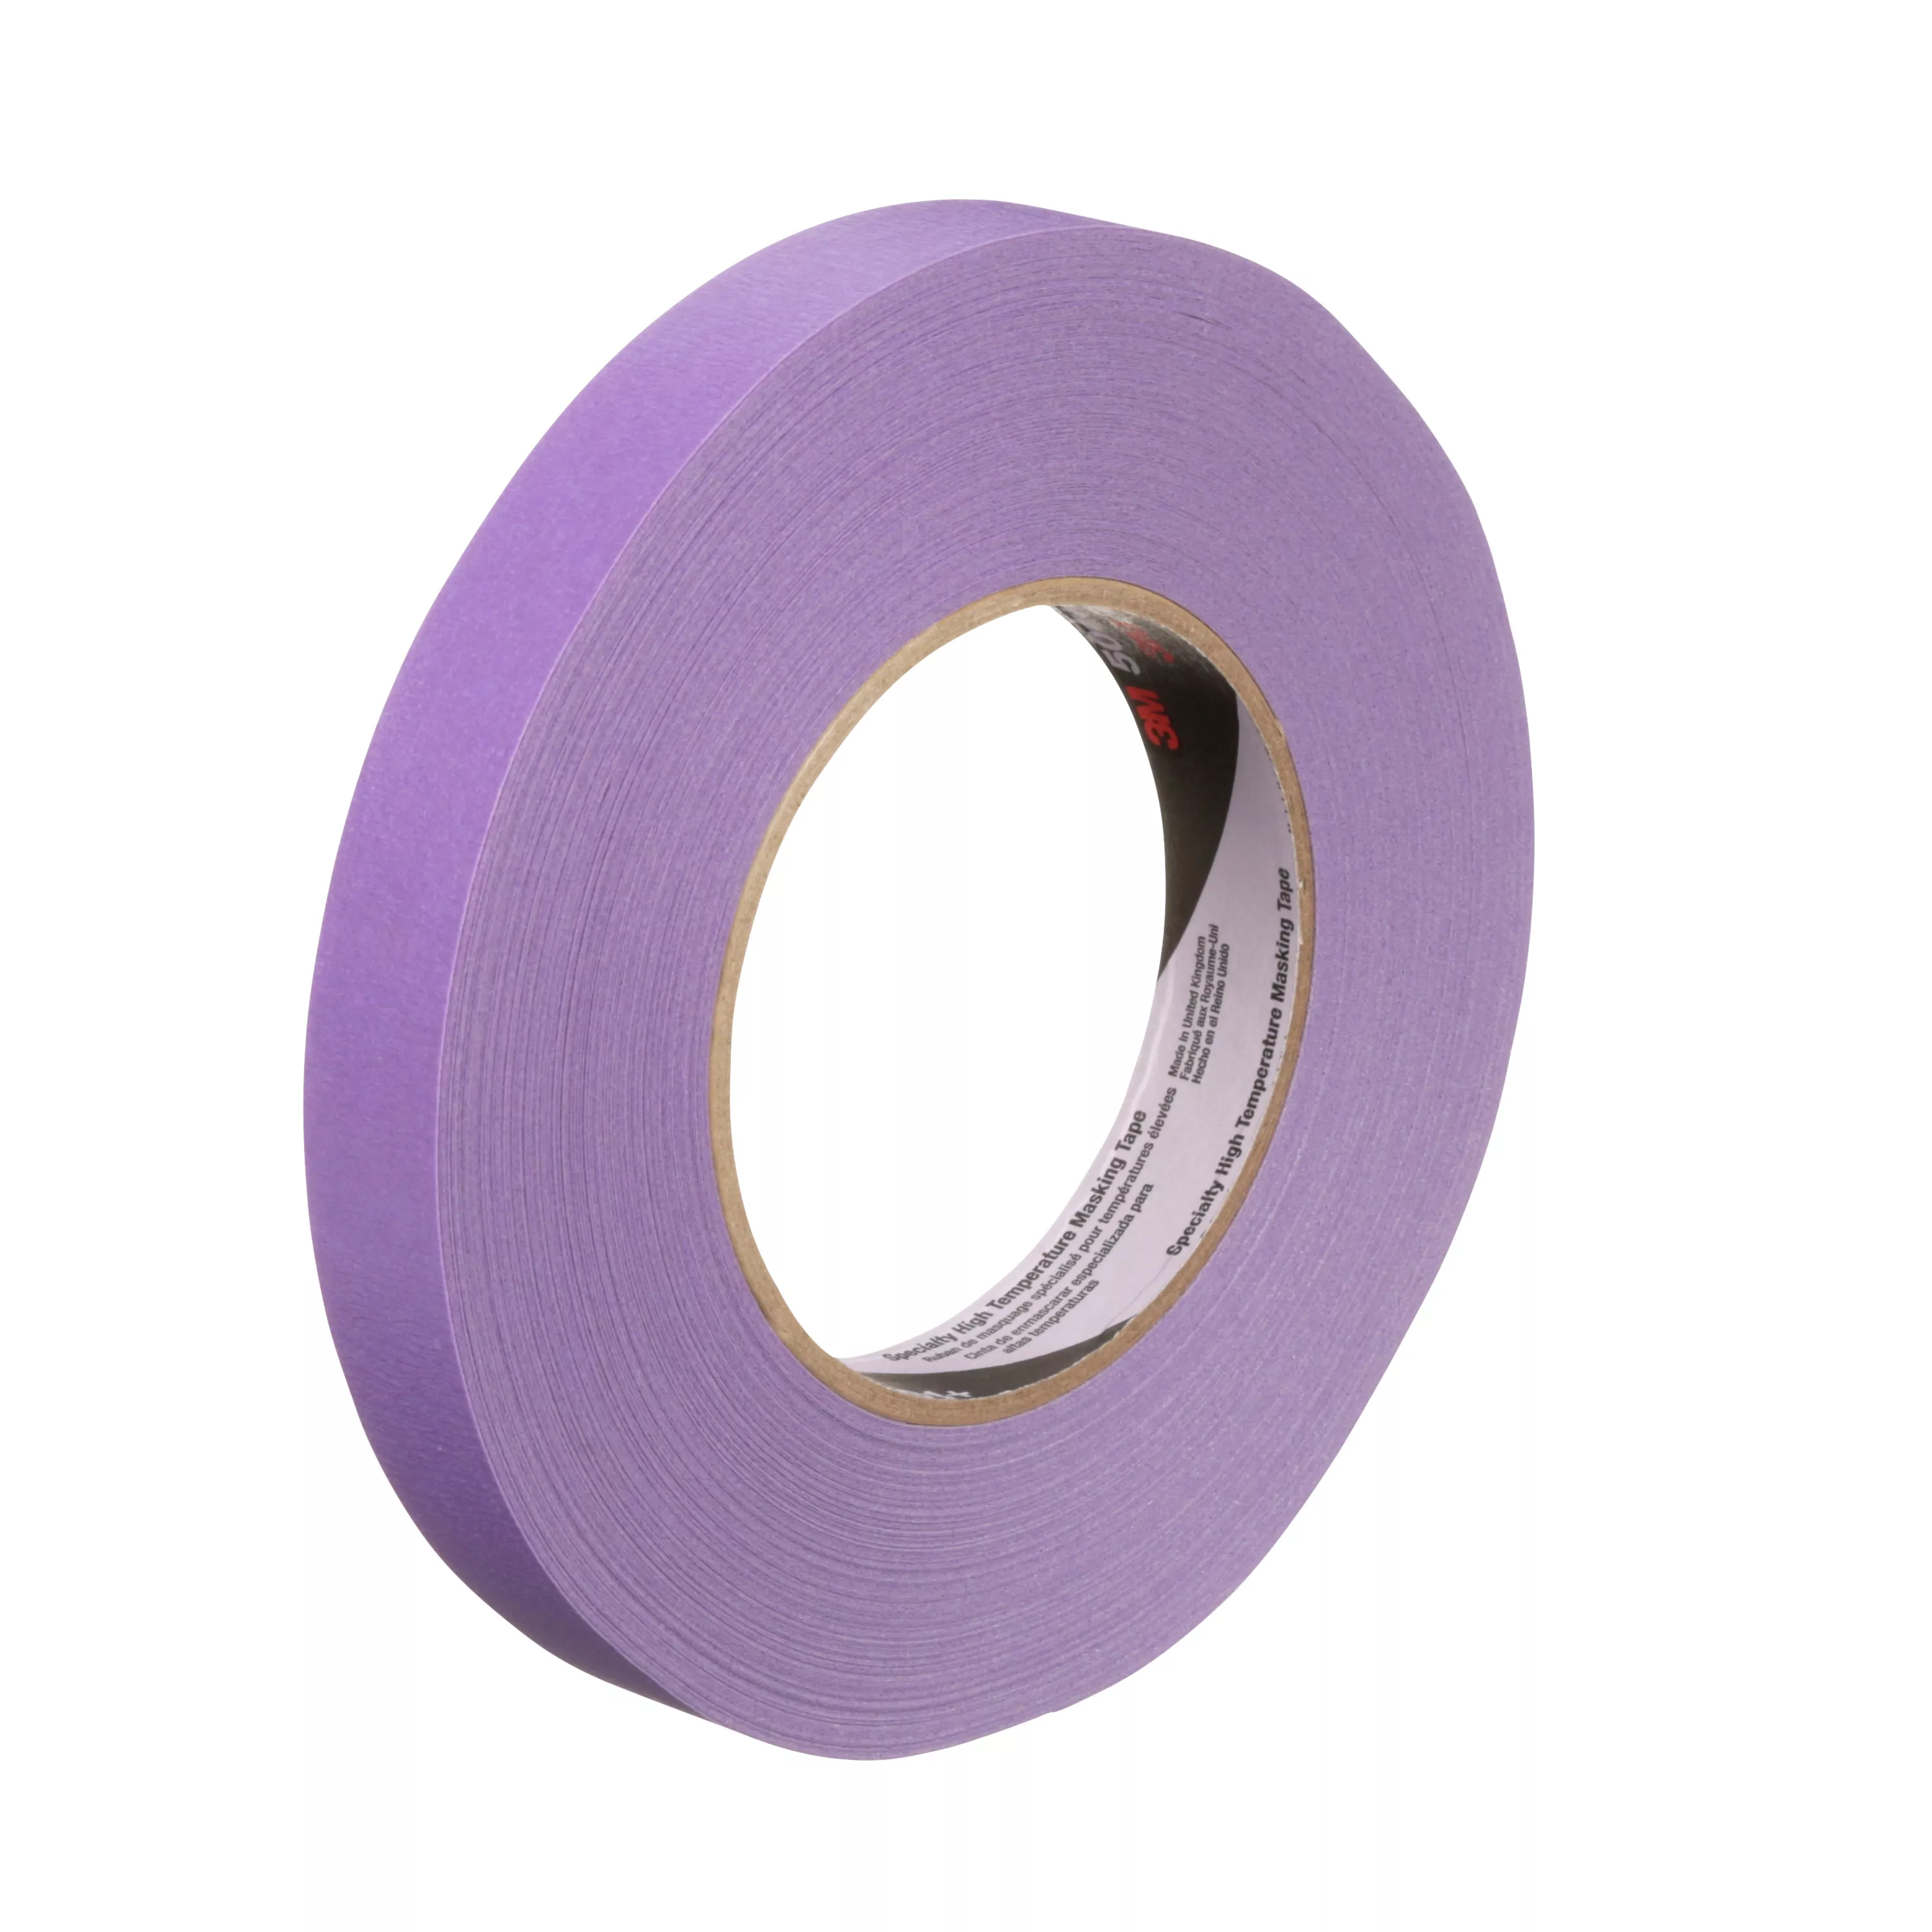 3M™ Specialty High Temperature Masking Tape 501+, Purple, 18 mm x 55
m,
 6.0 mil, 48 Rolls/Case